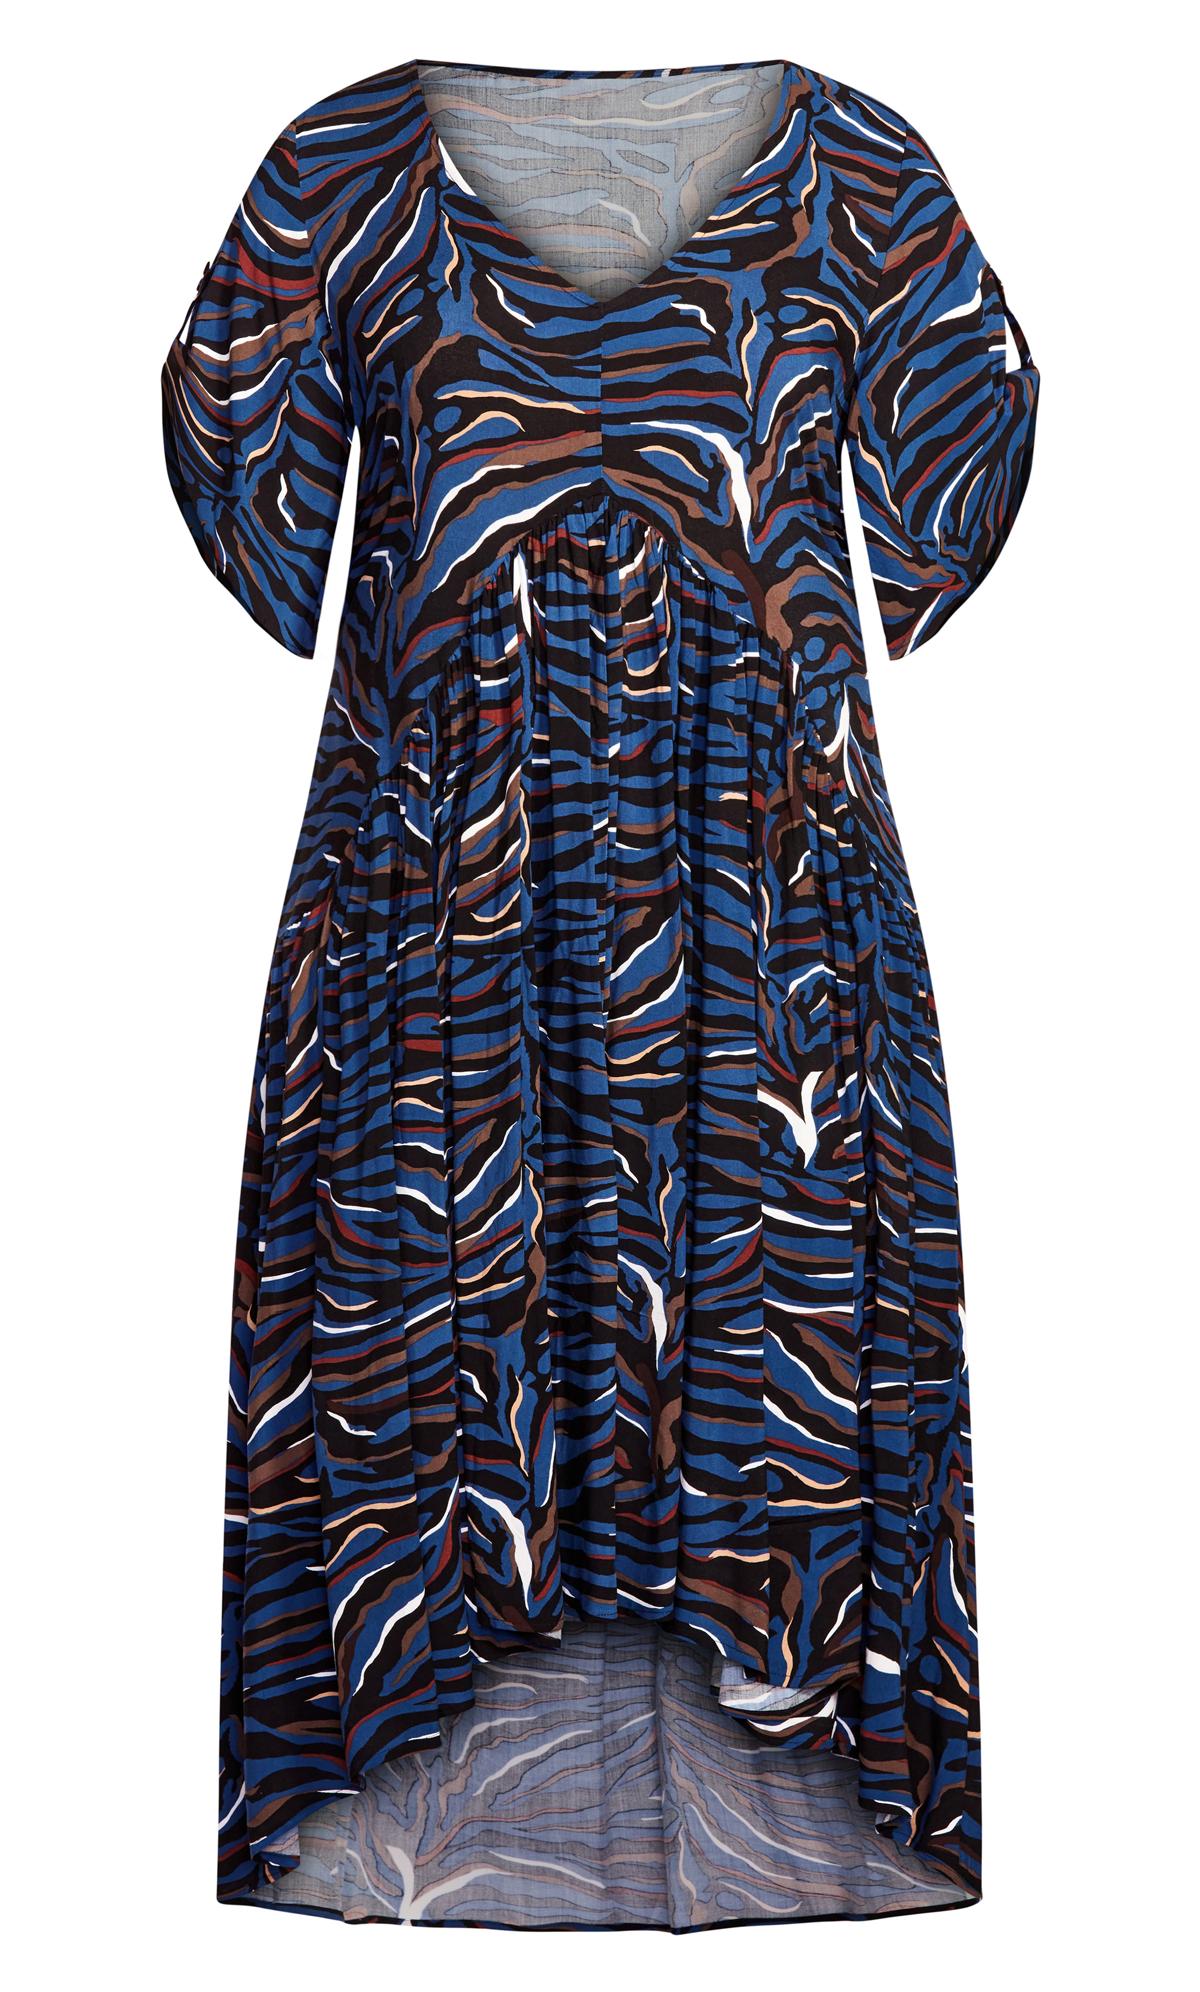 Val Print Blue Zebra Dress 3